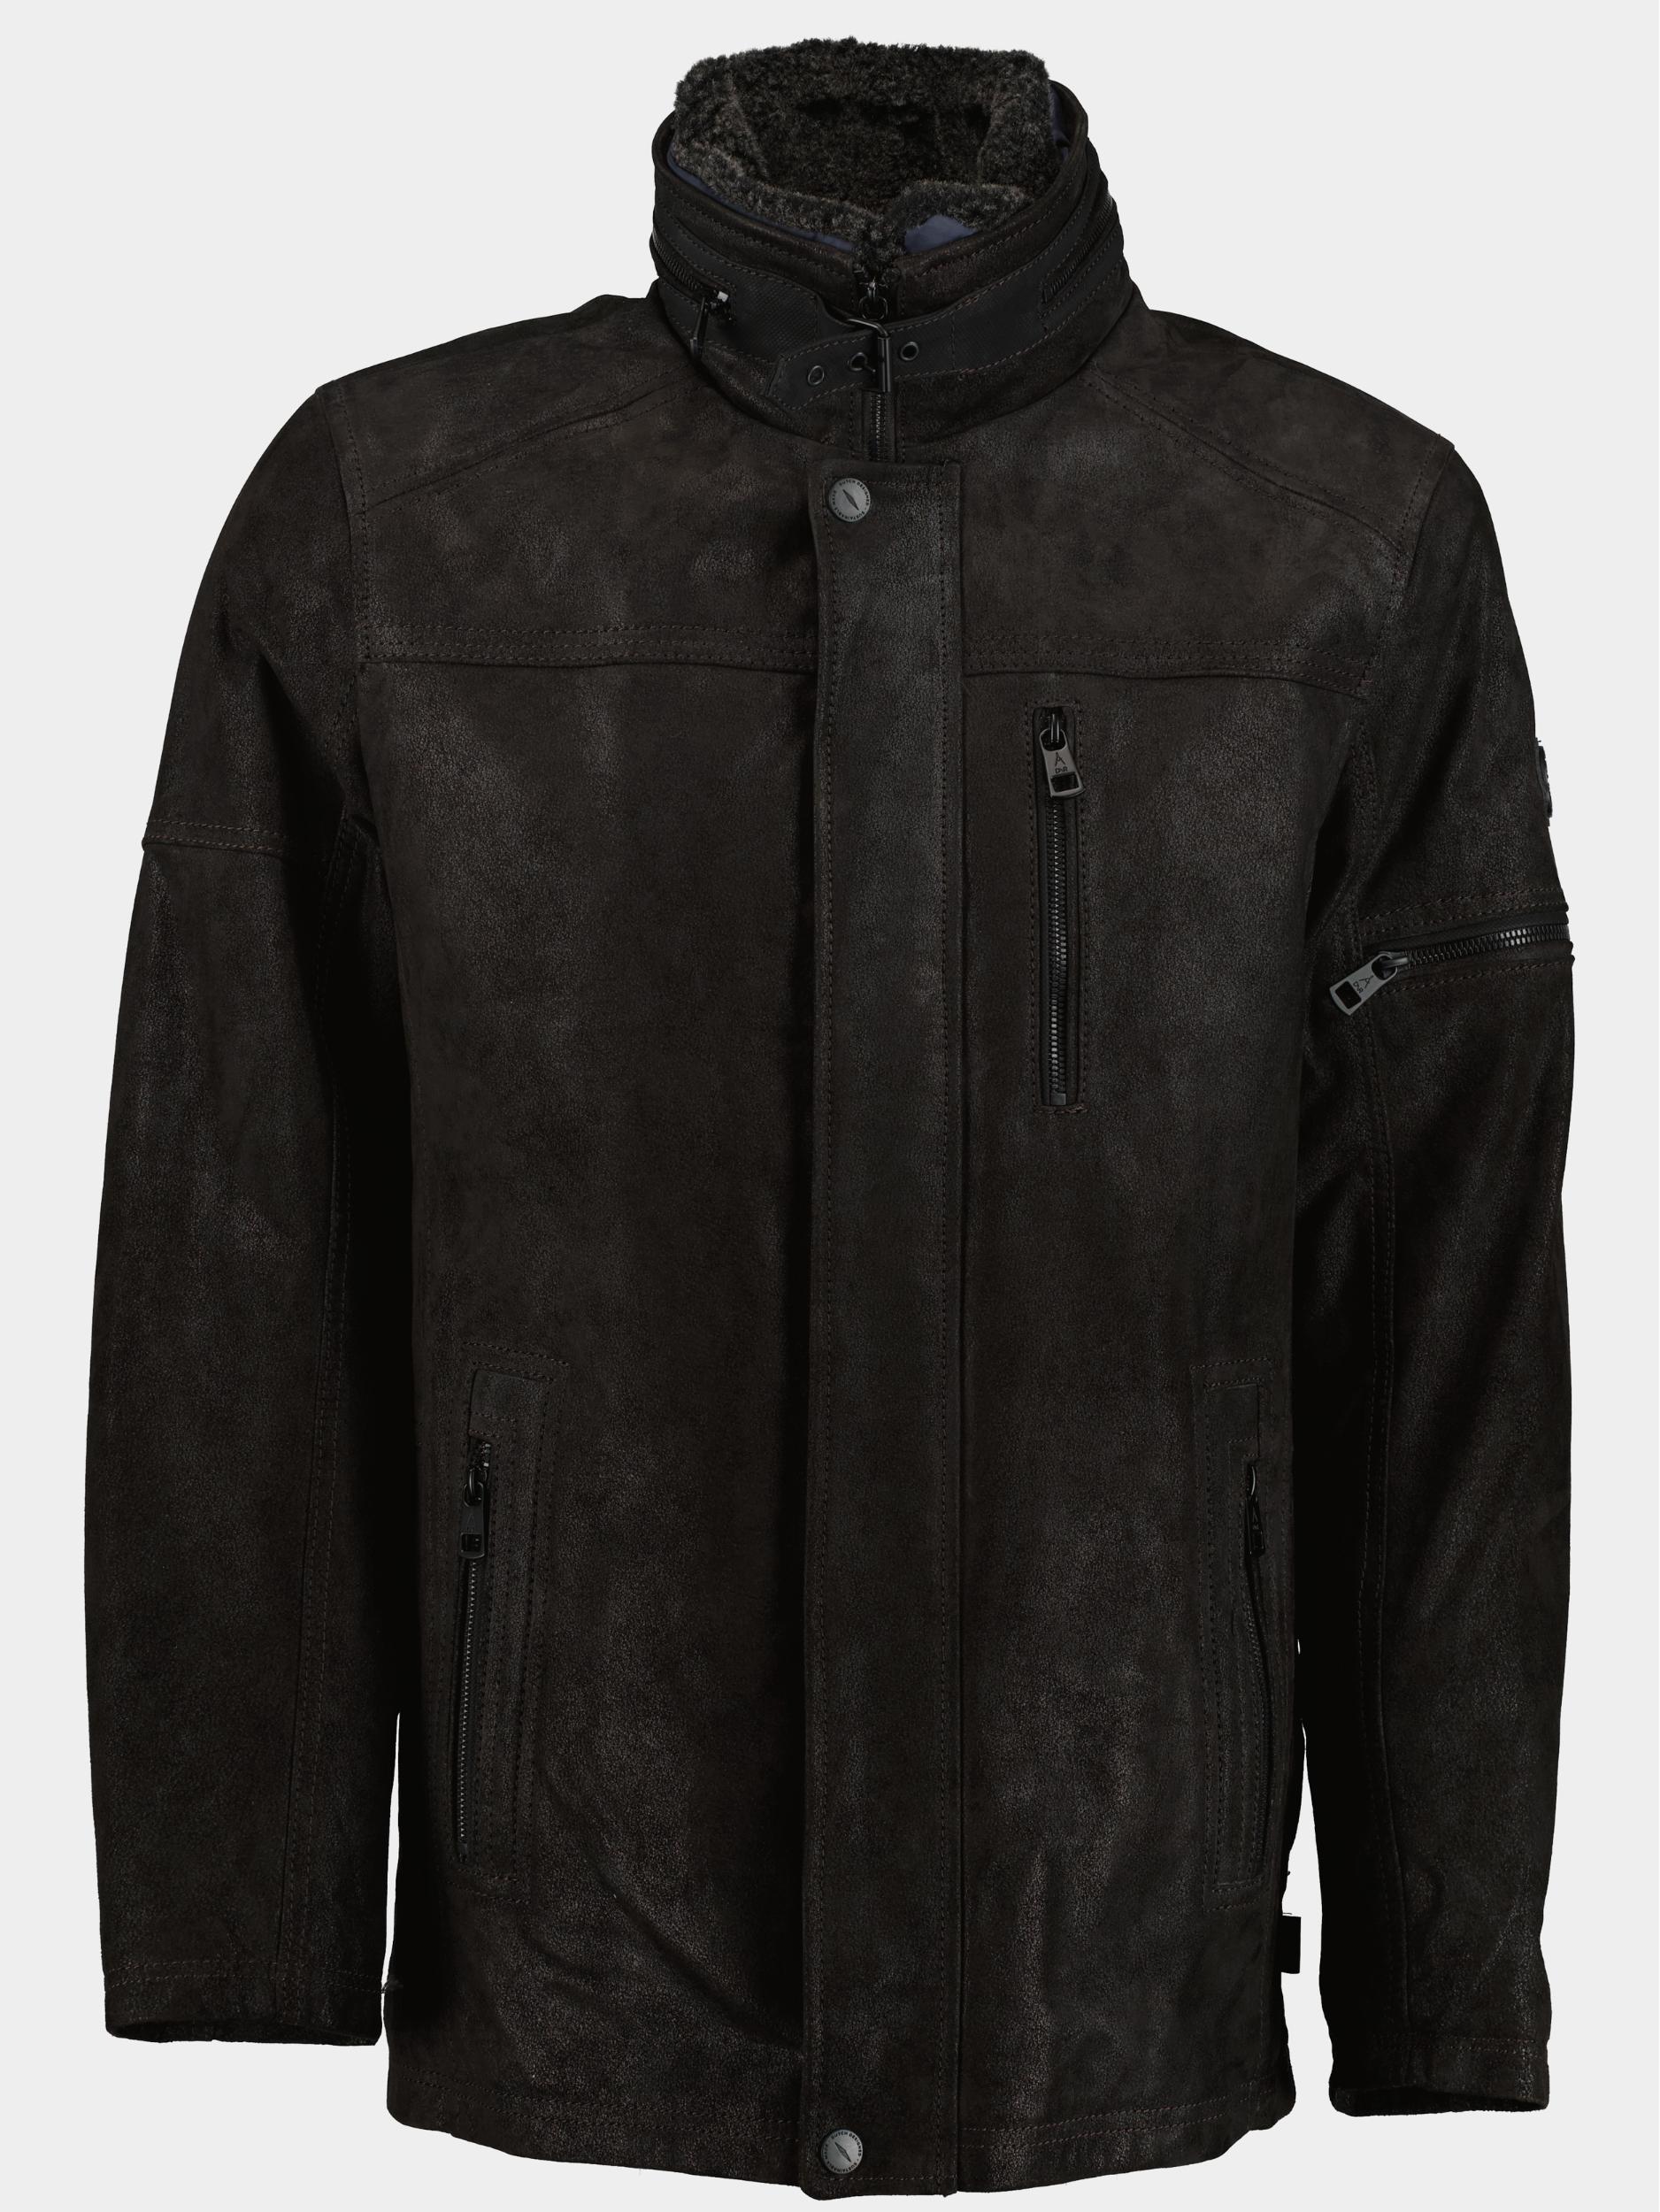 Afbeelding van DNR Lederen jack leather jacket 42757/599